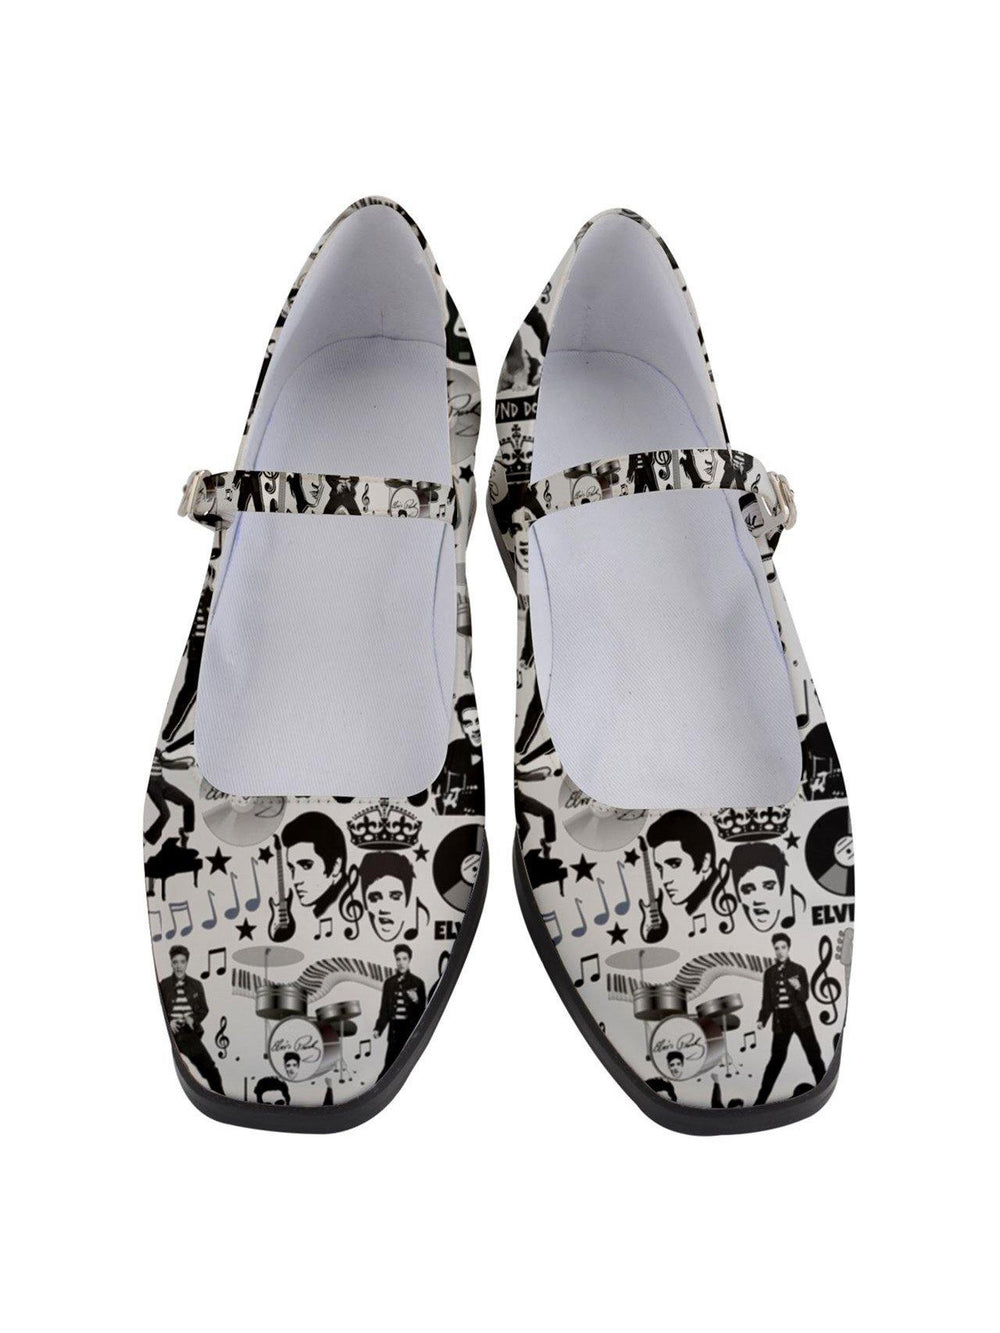 Elvis Print Women's Mary Jane Shoes